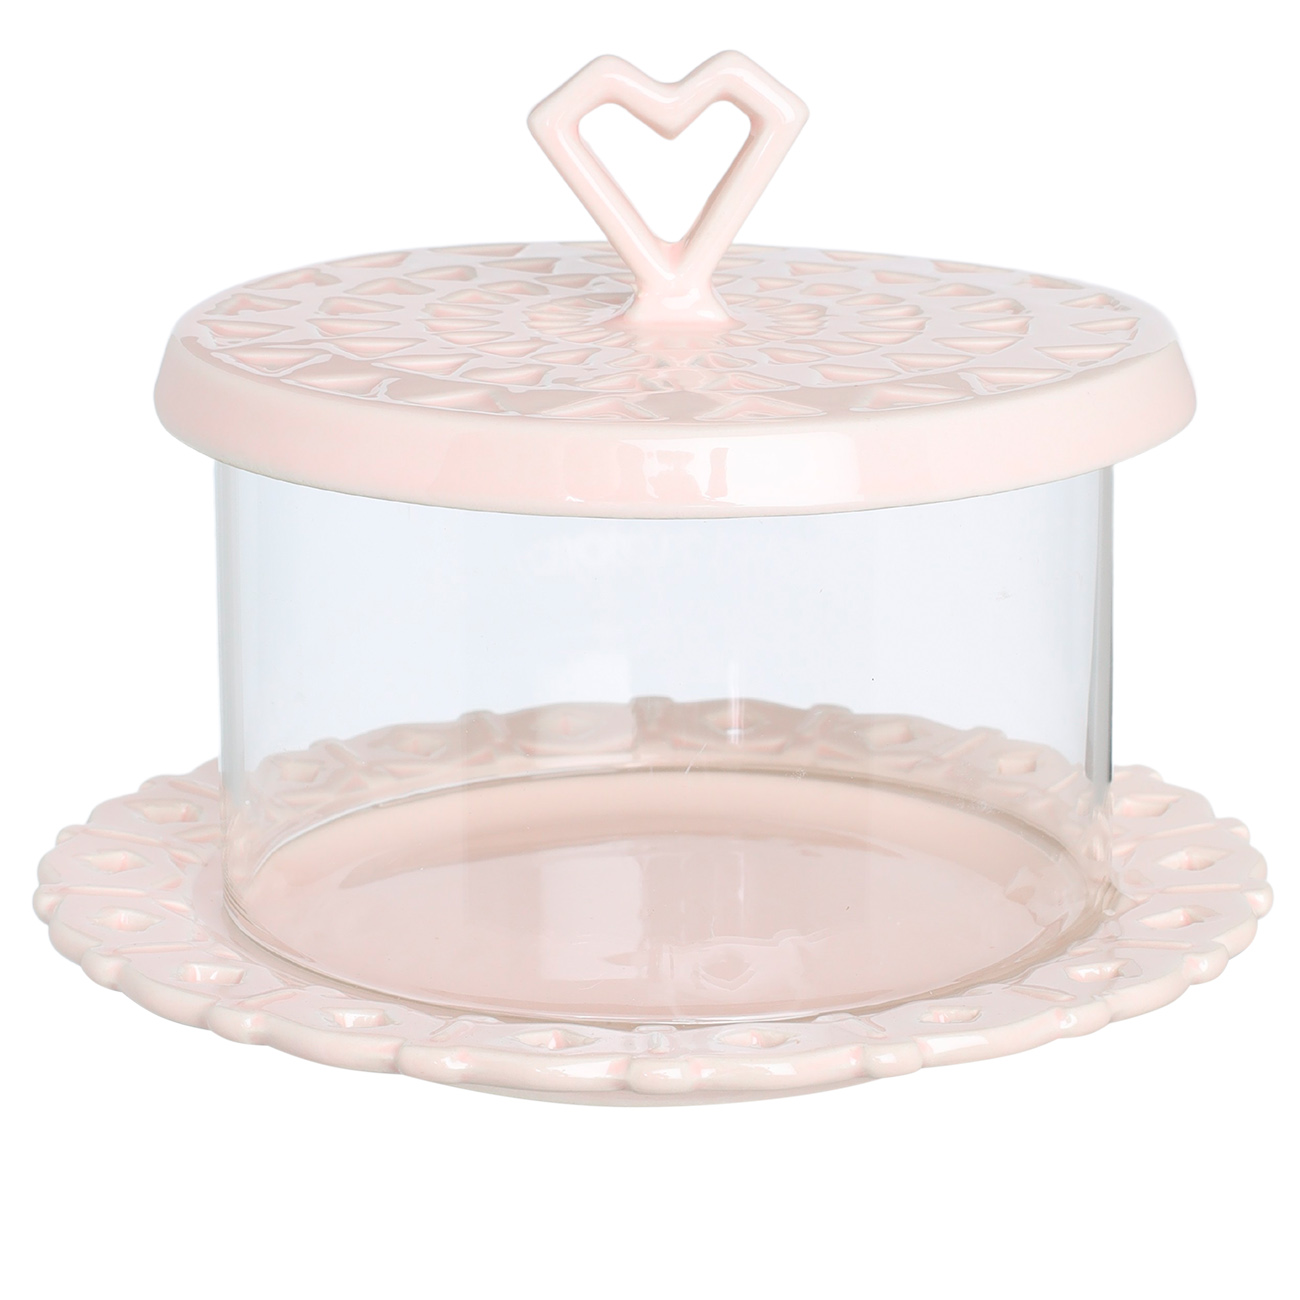 Тарелка десертная, 16 см, с куполом, керамика/стекло, розовая, Сердце, Pure heart